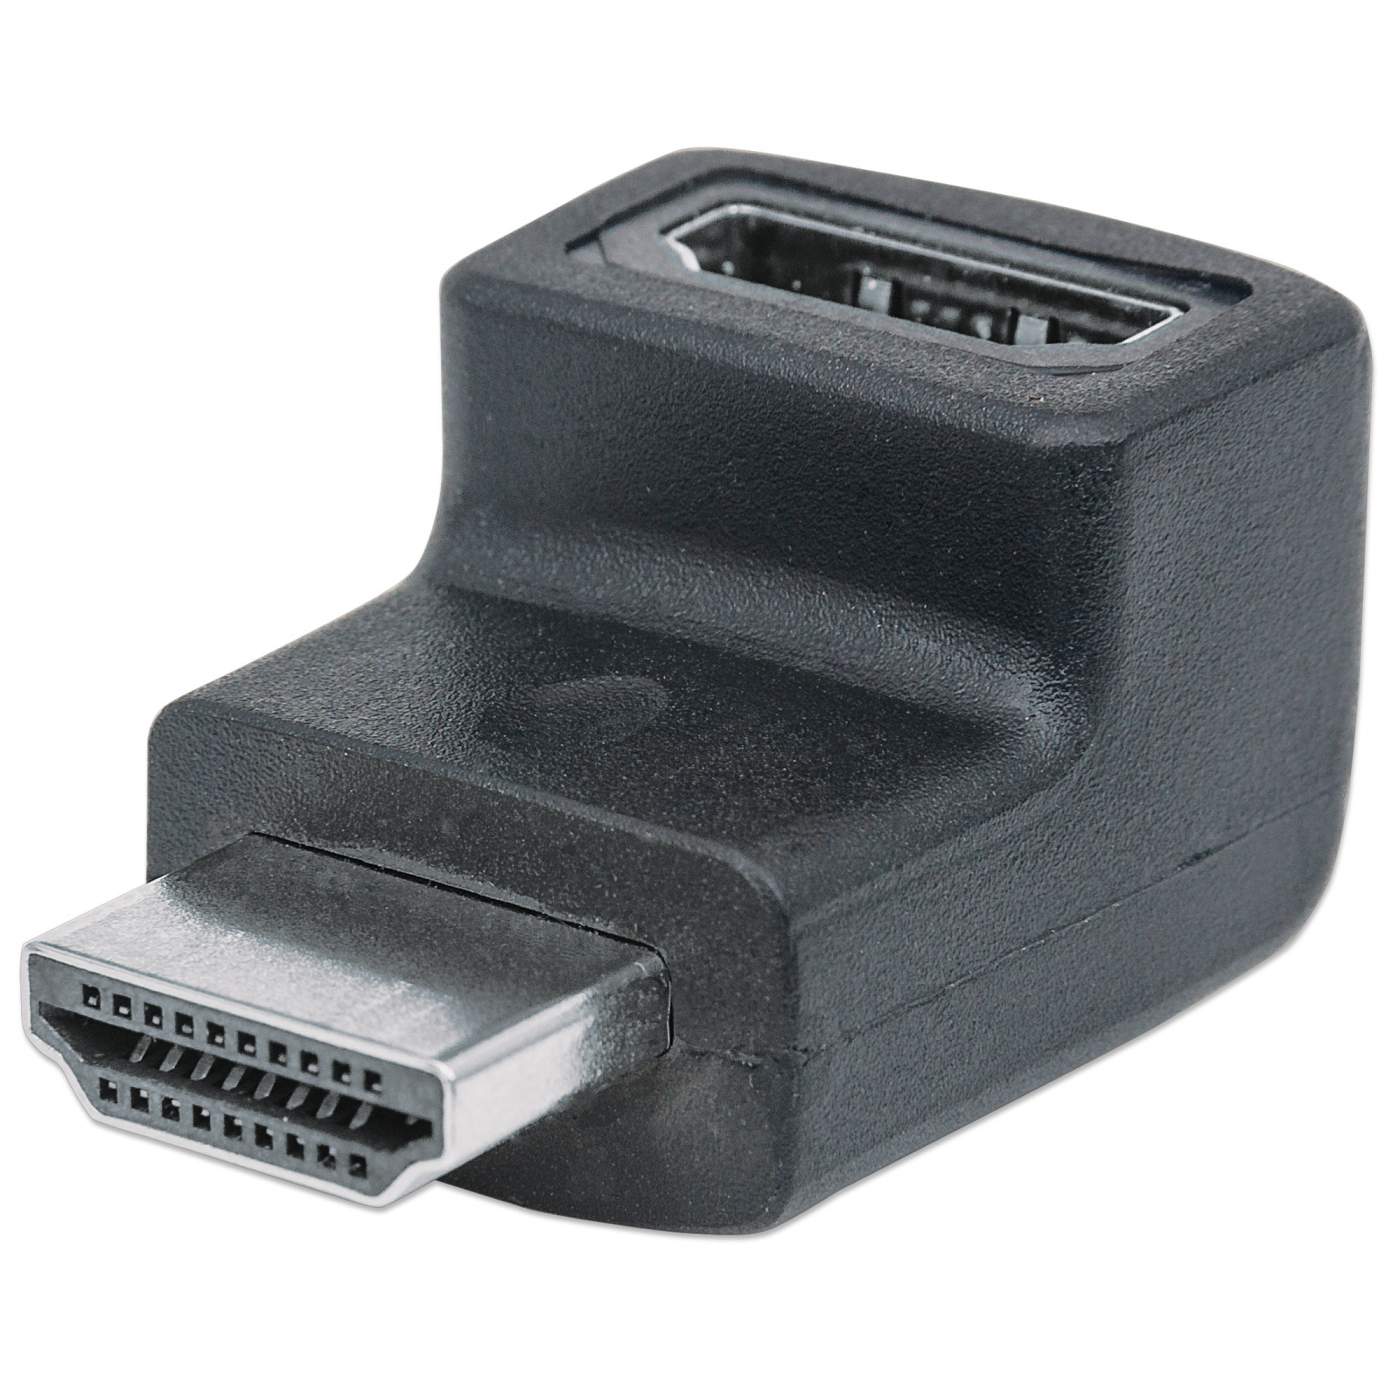 HDMI Adapter Image 1